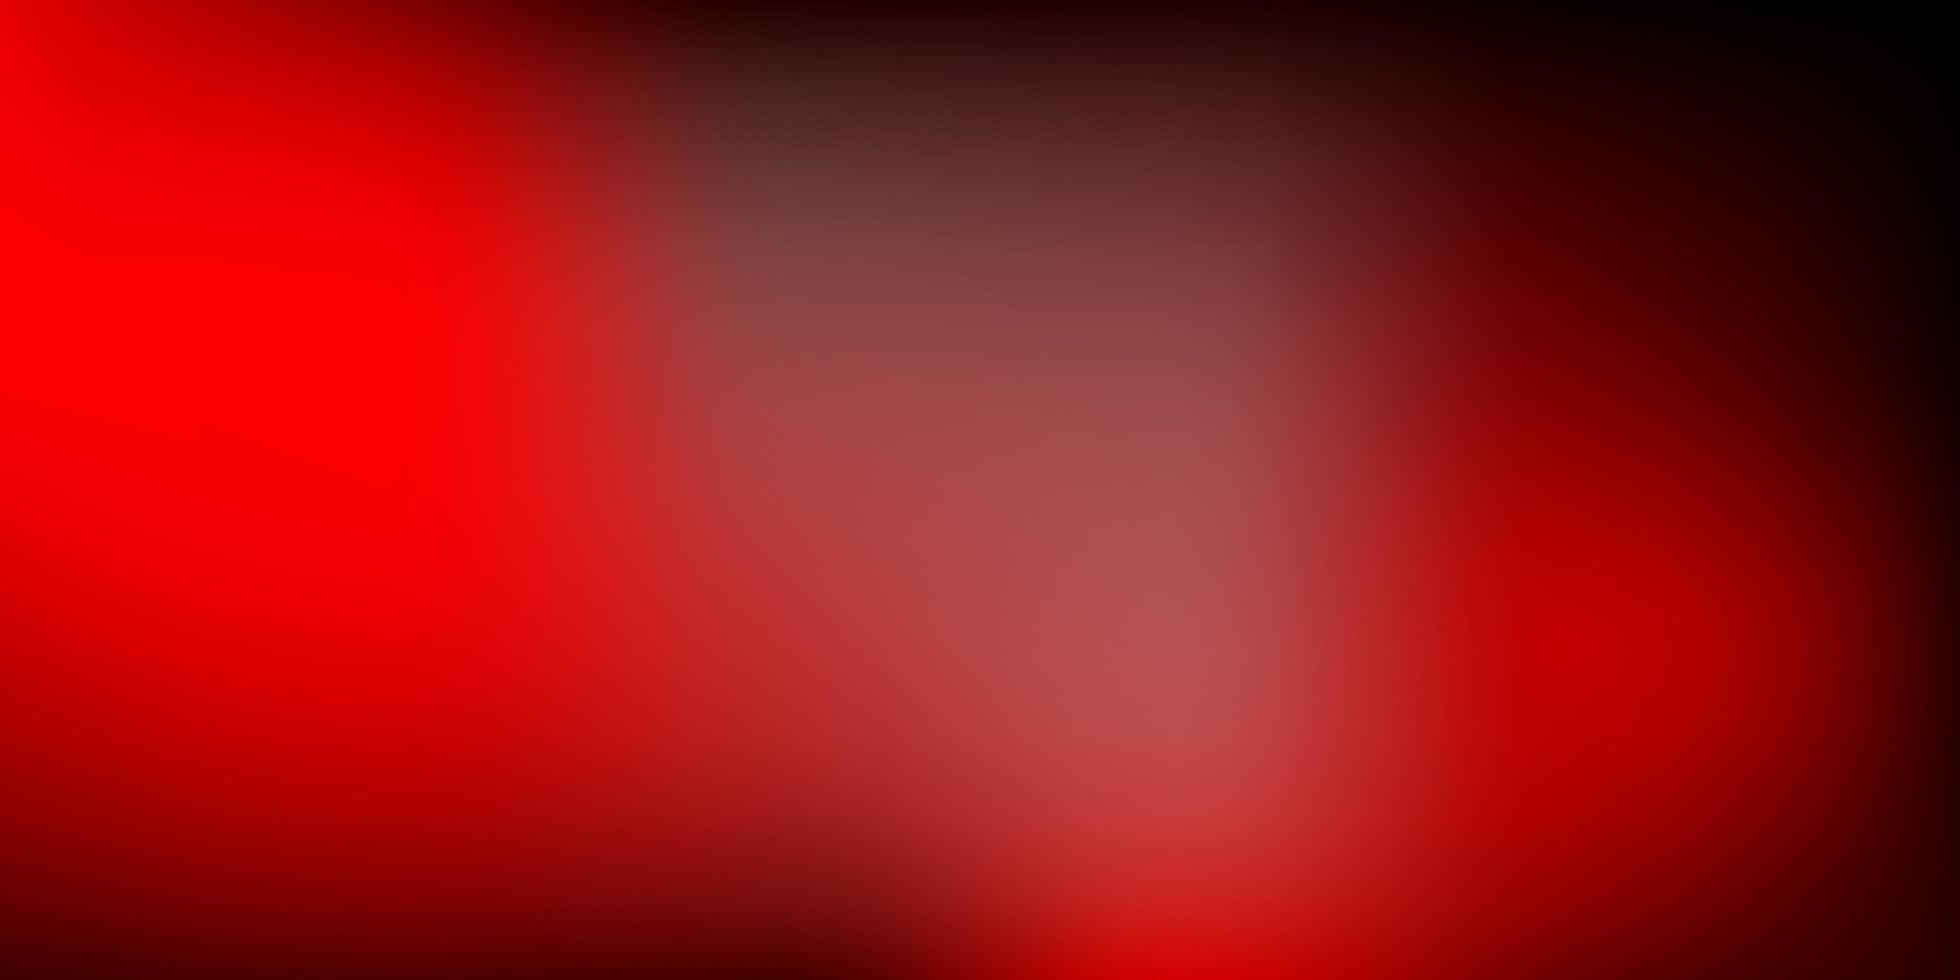 plantilla borrosa vector rojo oscuro